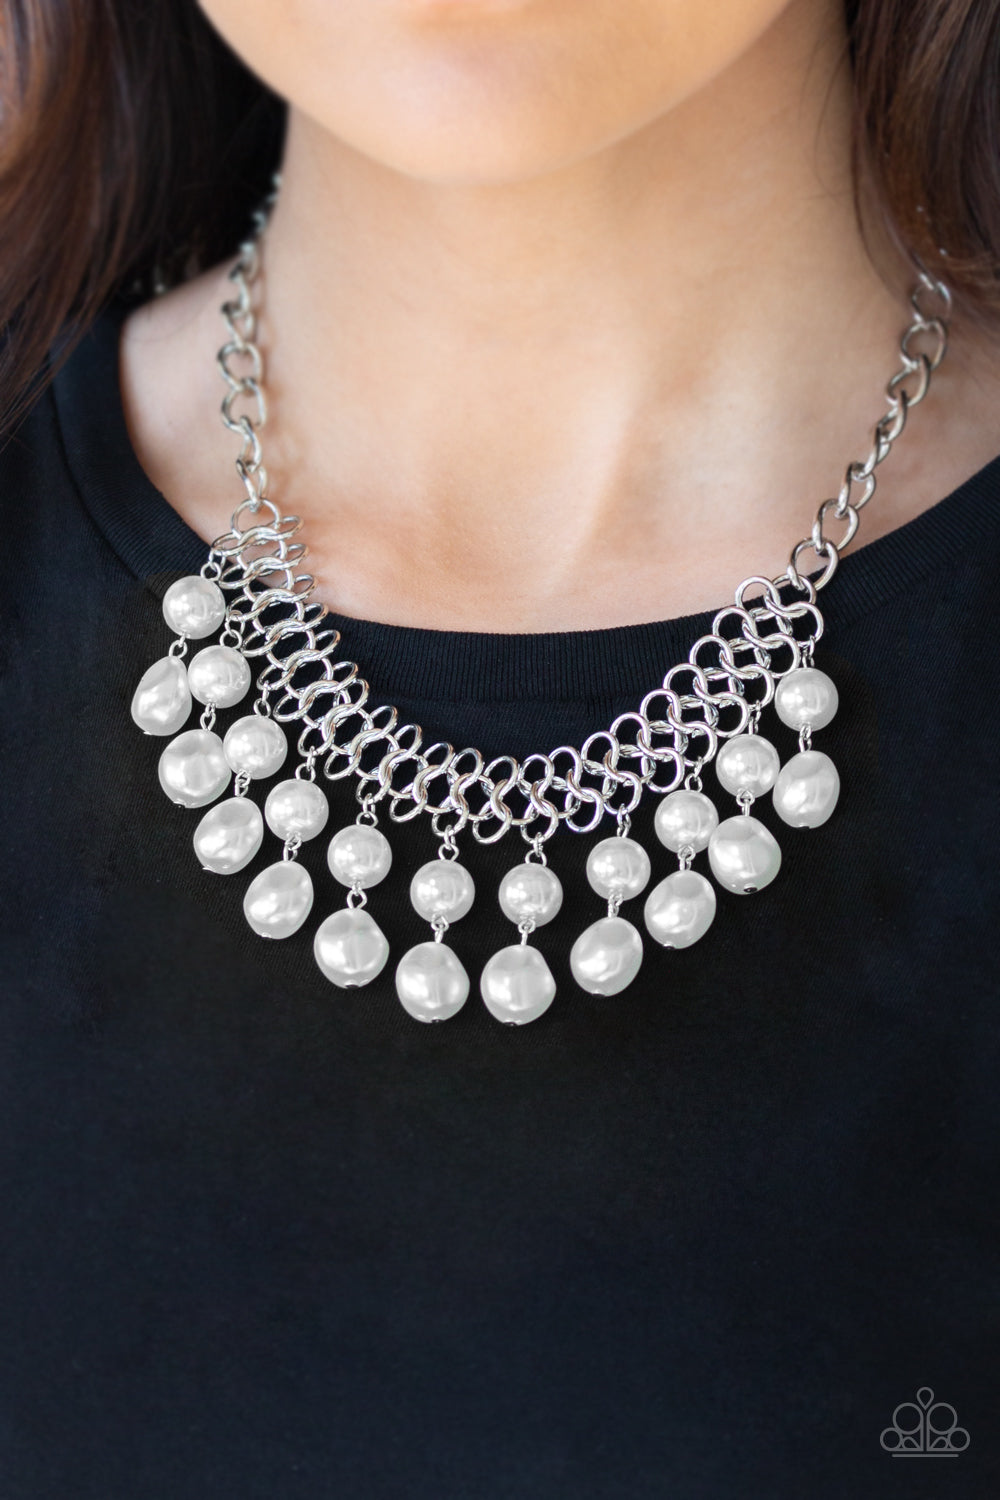 Paparazzi Accessories - 5th Avenue Fleek - White (Pearls) Necklace